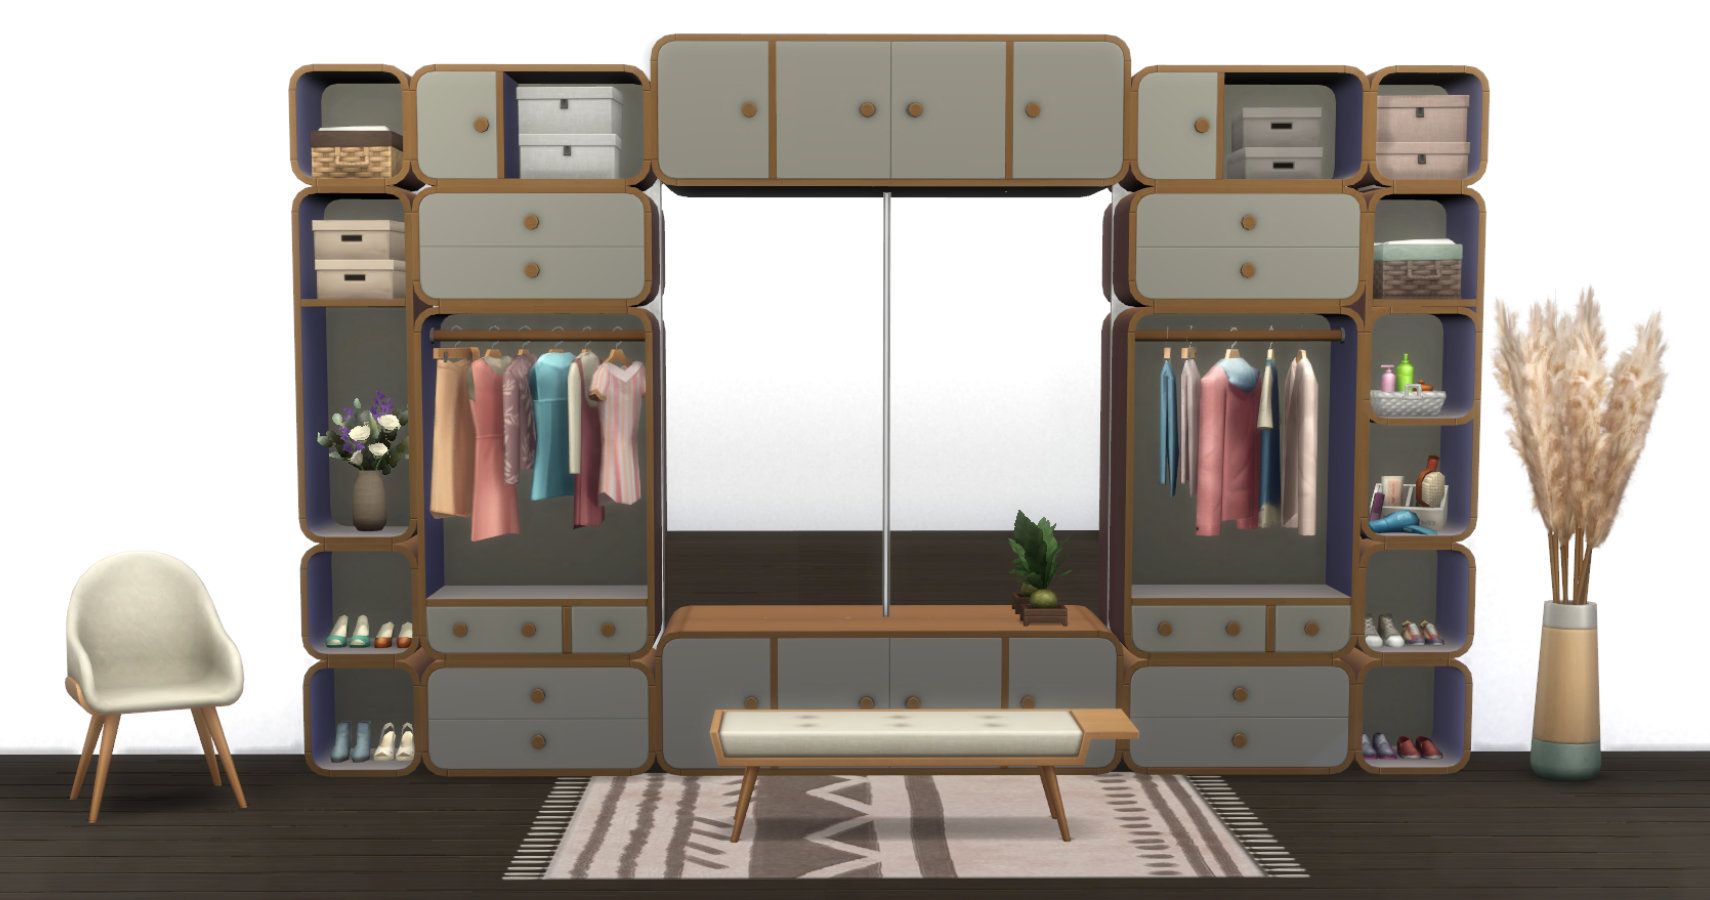 Sims 4 decor bedroom design